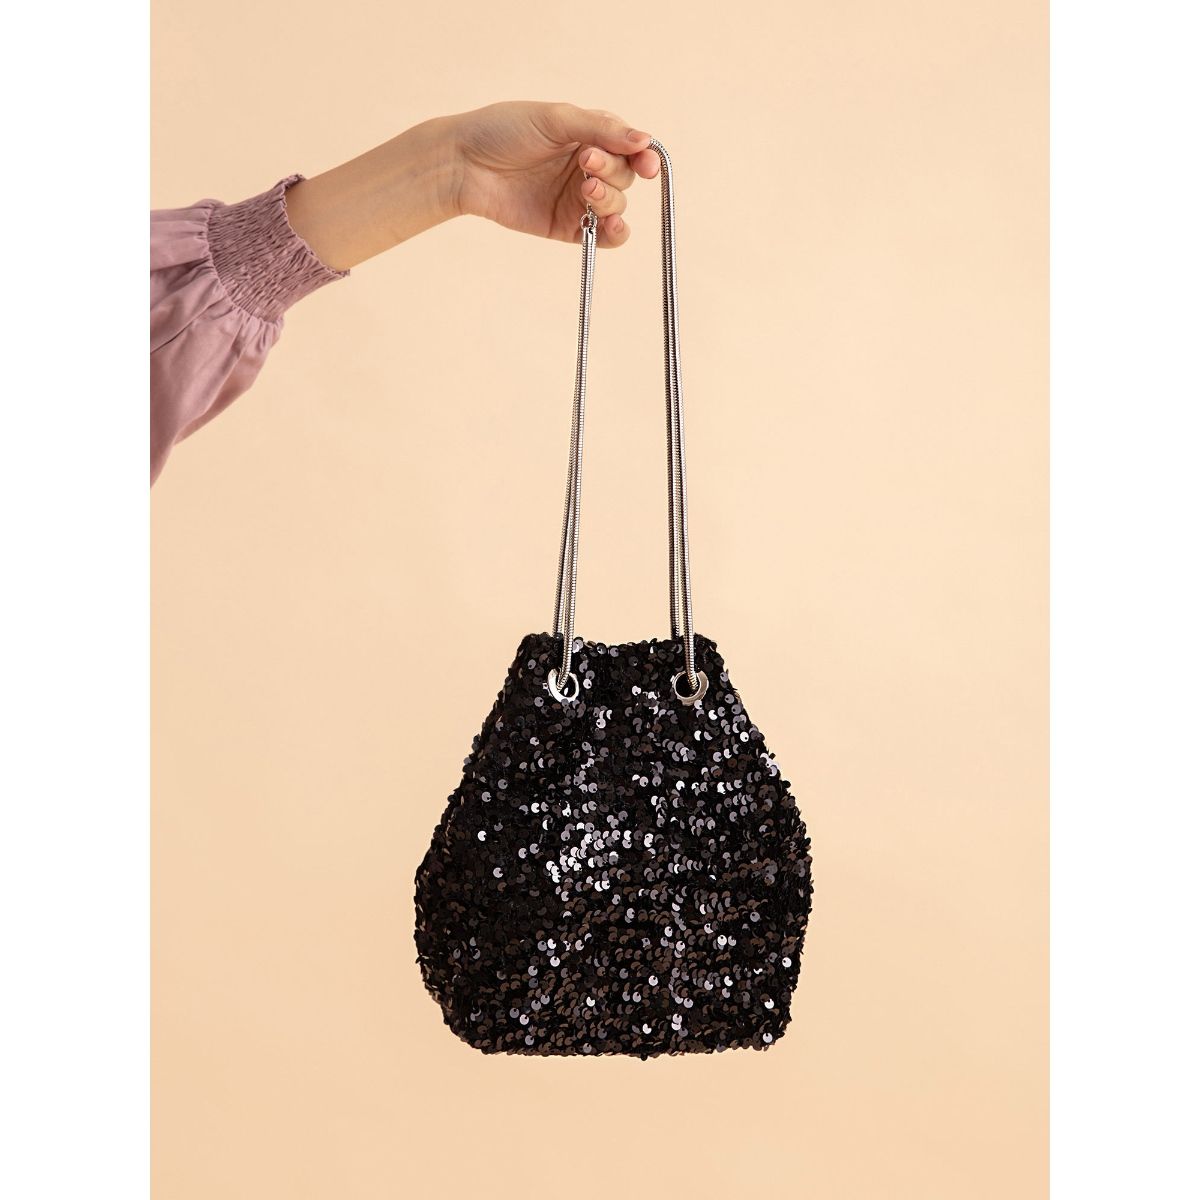 DN Creation Black Sling Bag BLACK GLITTER BAG 710 BLACK  Price in India   Flipkartcom